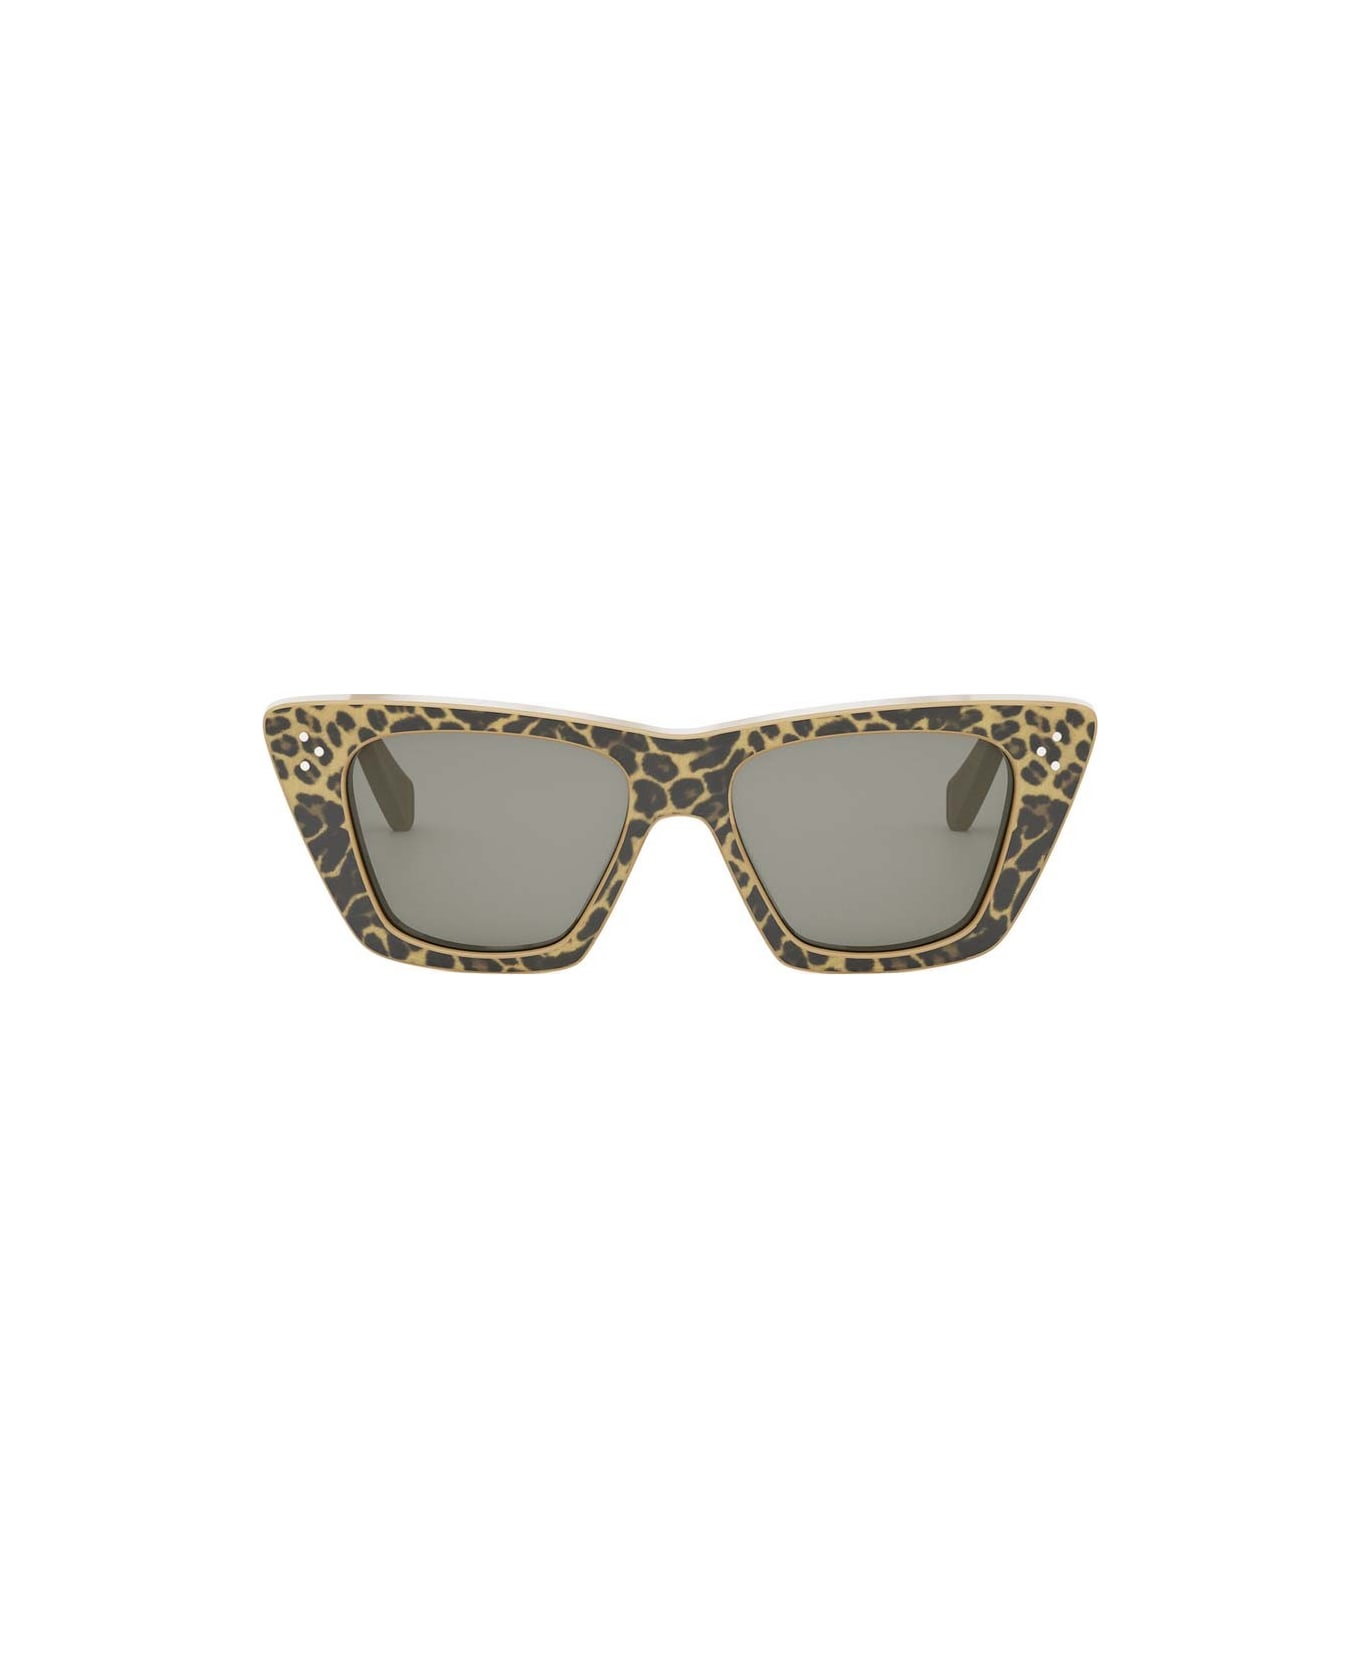 Celine Sunglasses - Leopardato/Oro/Grigio